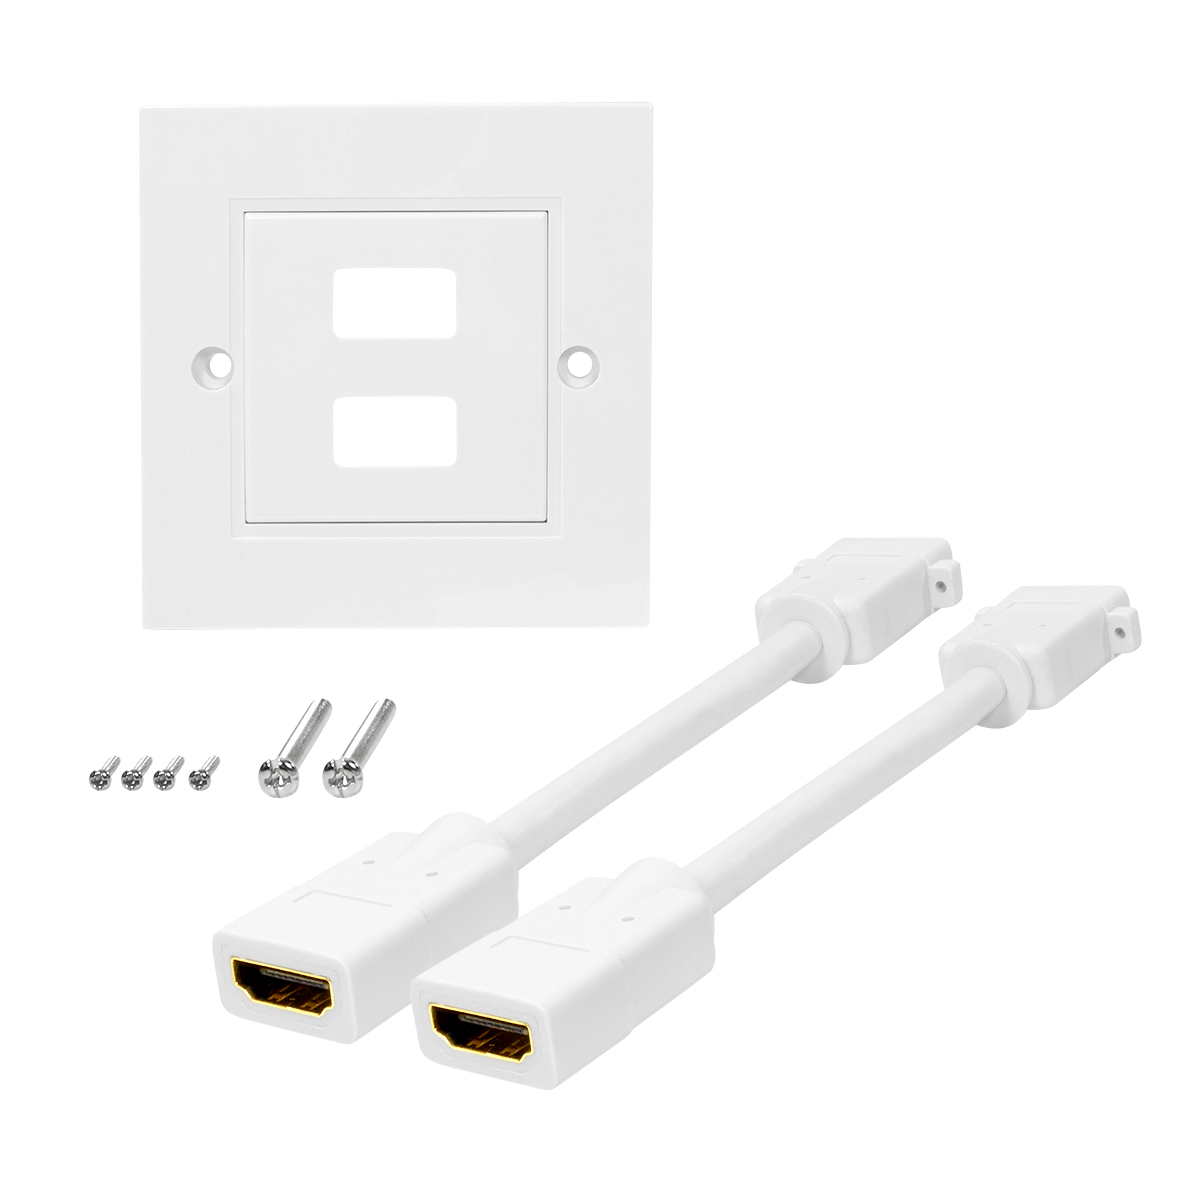 HDMI Einbau Dose 2 fach Dose 2x Buchse HighSpeed w Ethernet FULLHD 3D weiß weiss 